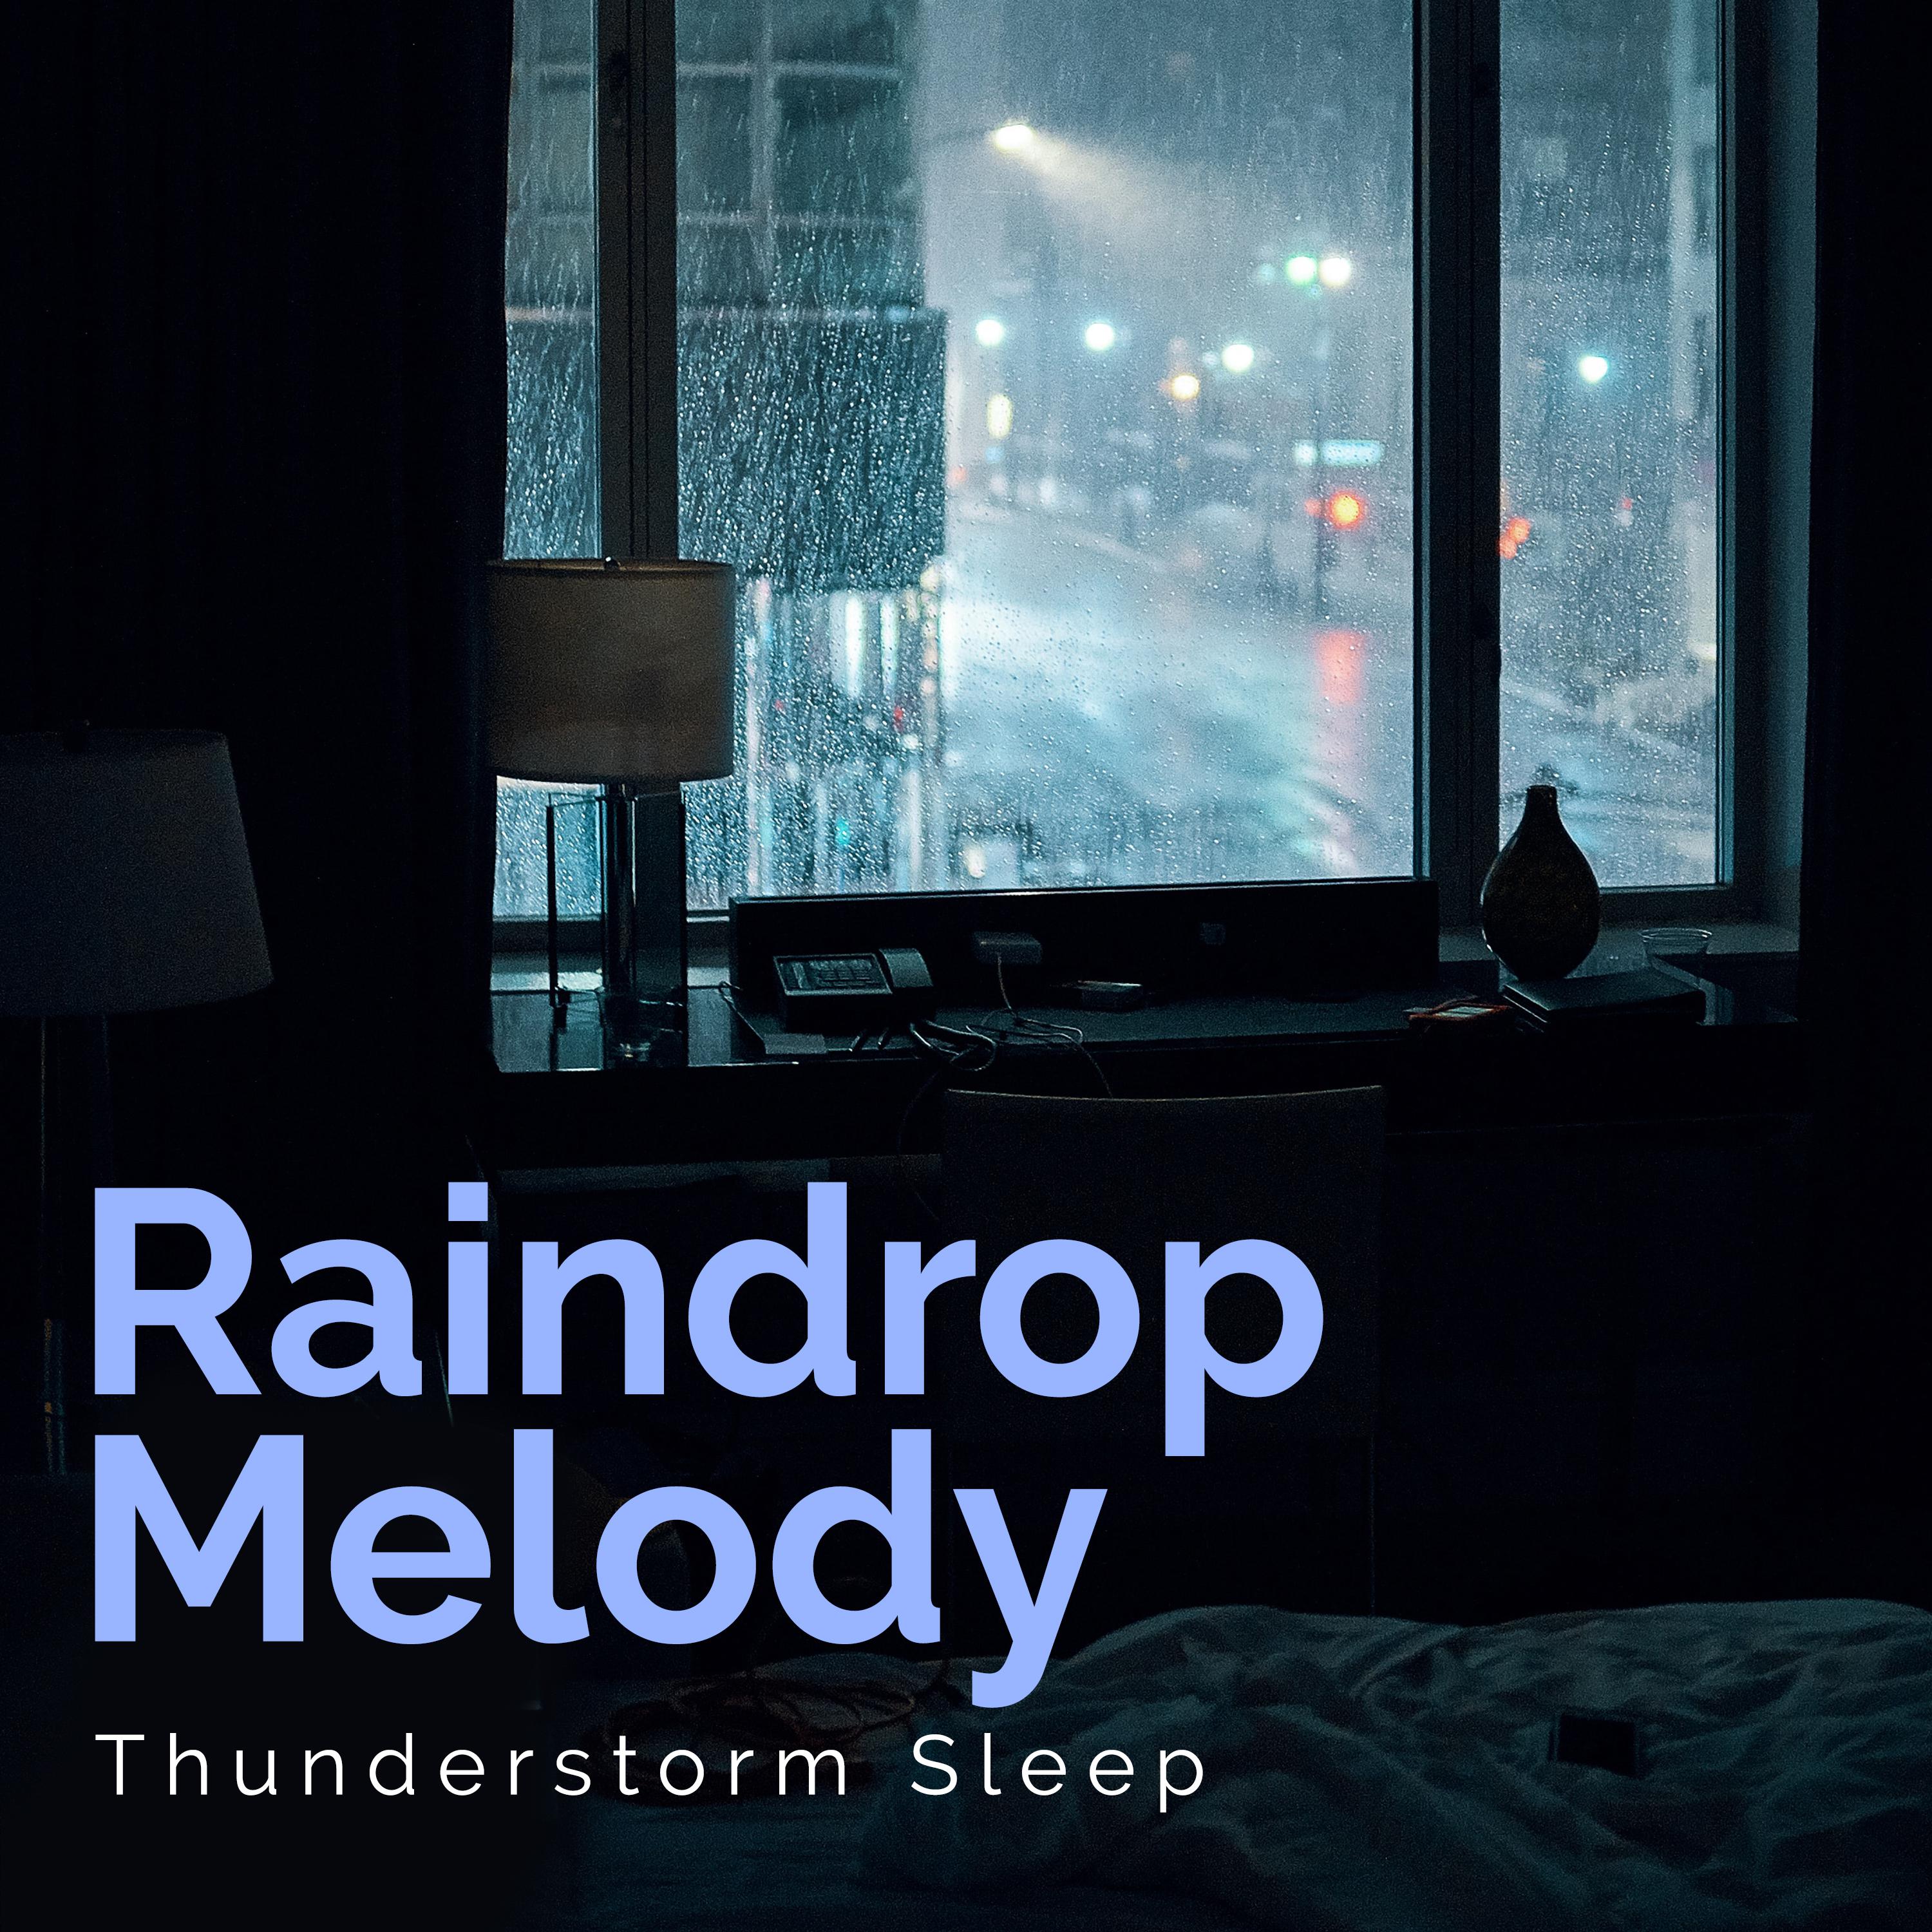 Raindrop Melody